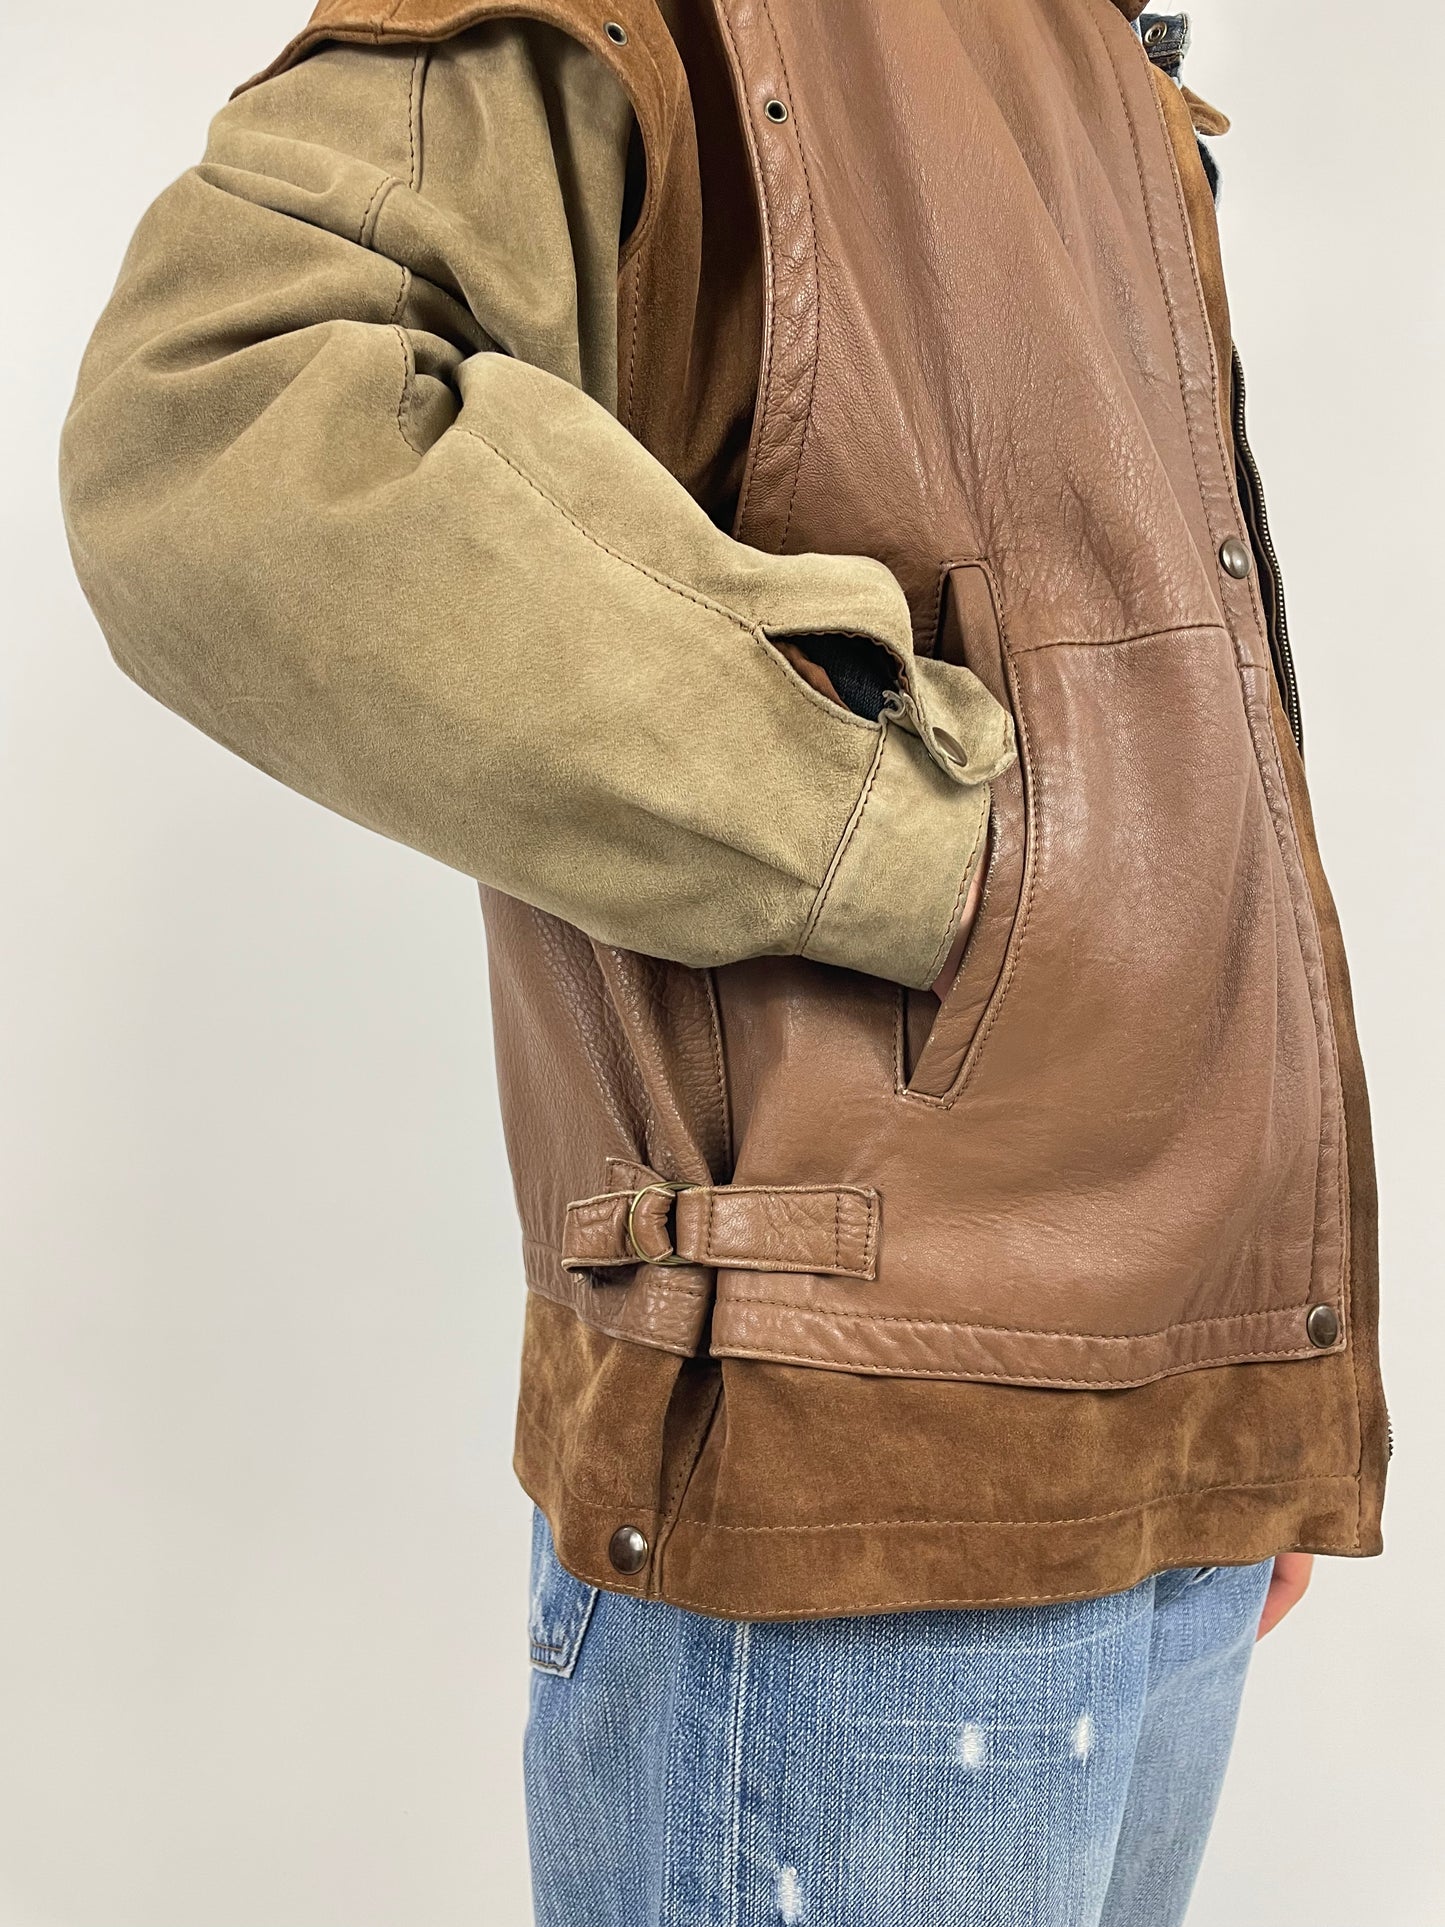 Osvaldo Testa jacket - Leather and suede